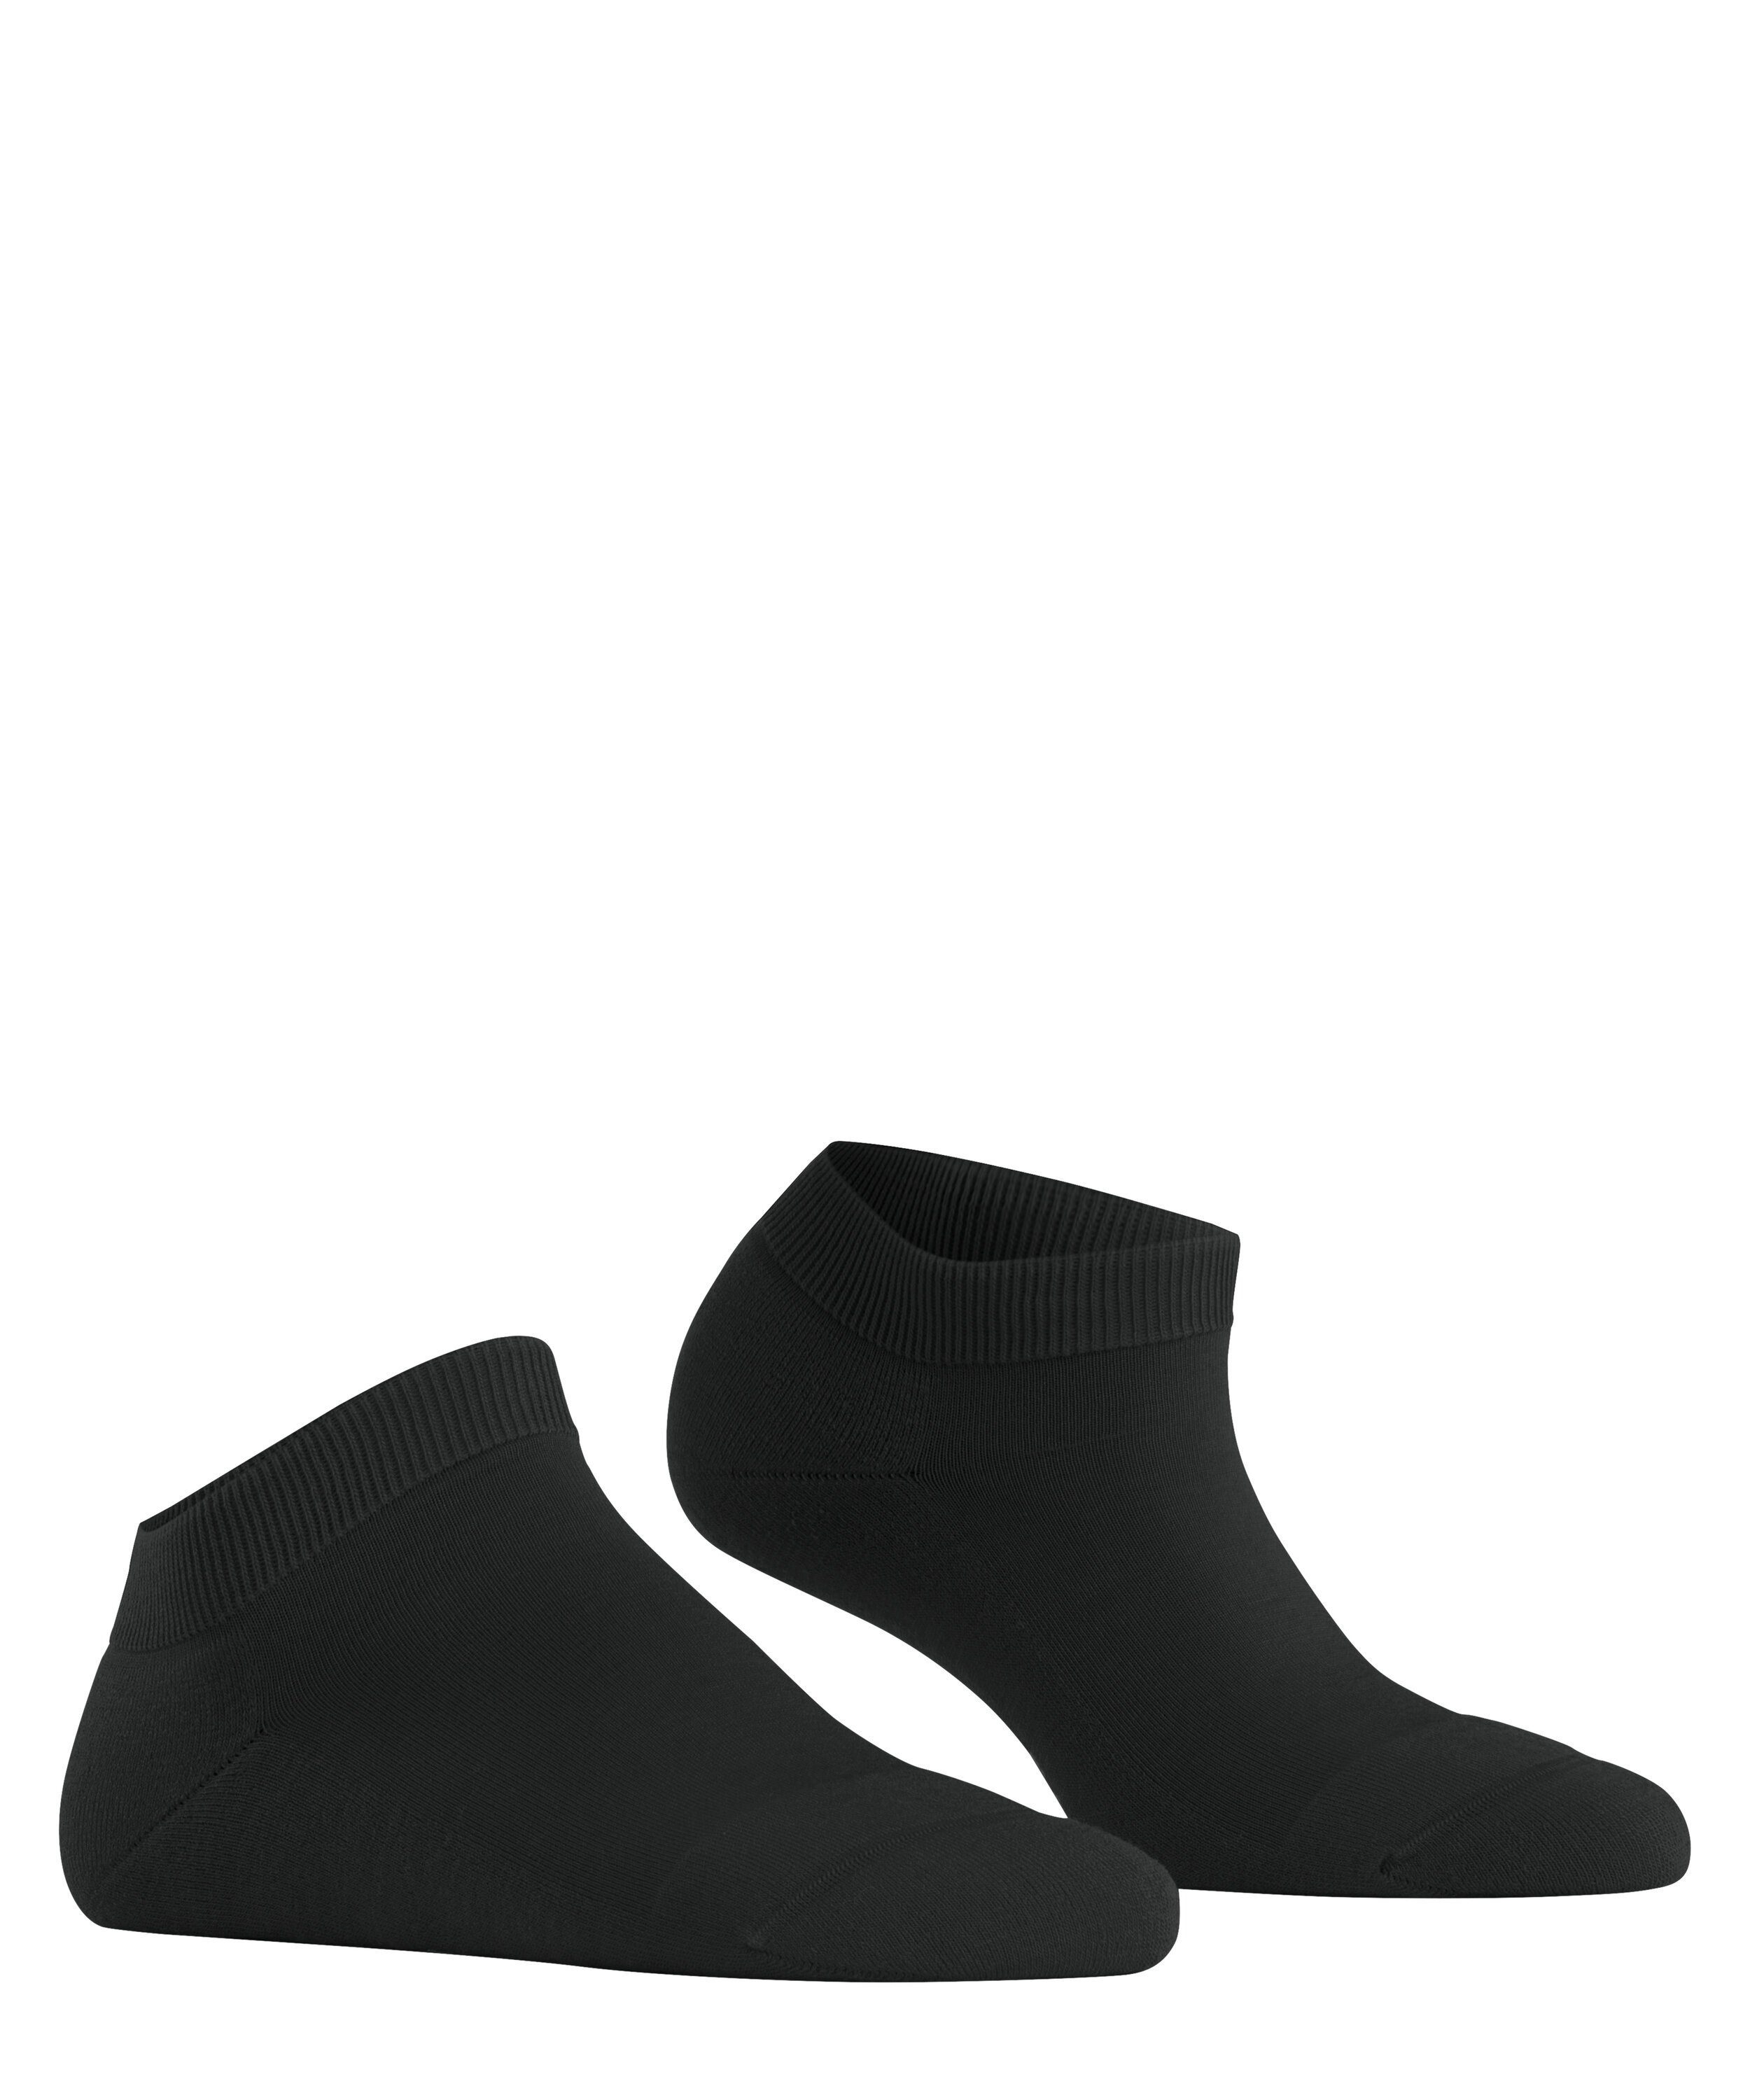 (3000) black Wolle-Lyocell klimaregulierender FALKE (1-Paar) aus ClimaWool Mischung Sneakersocken